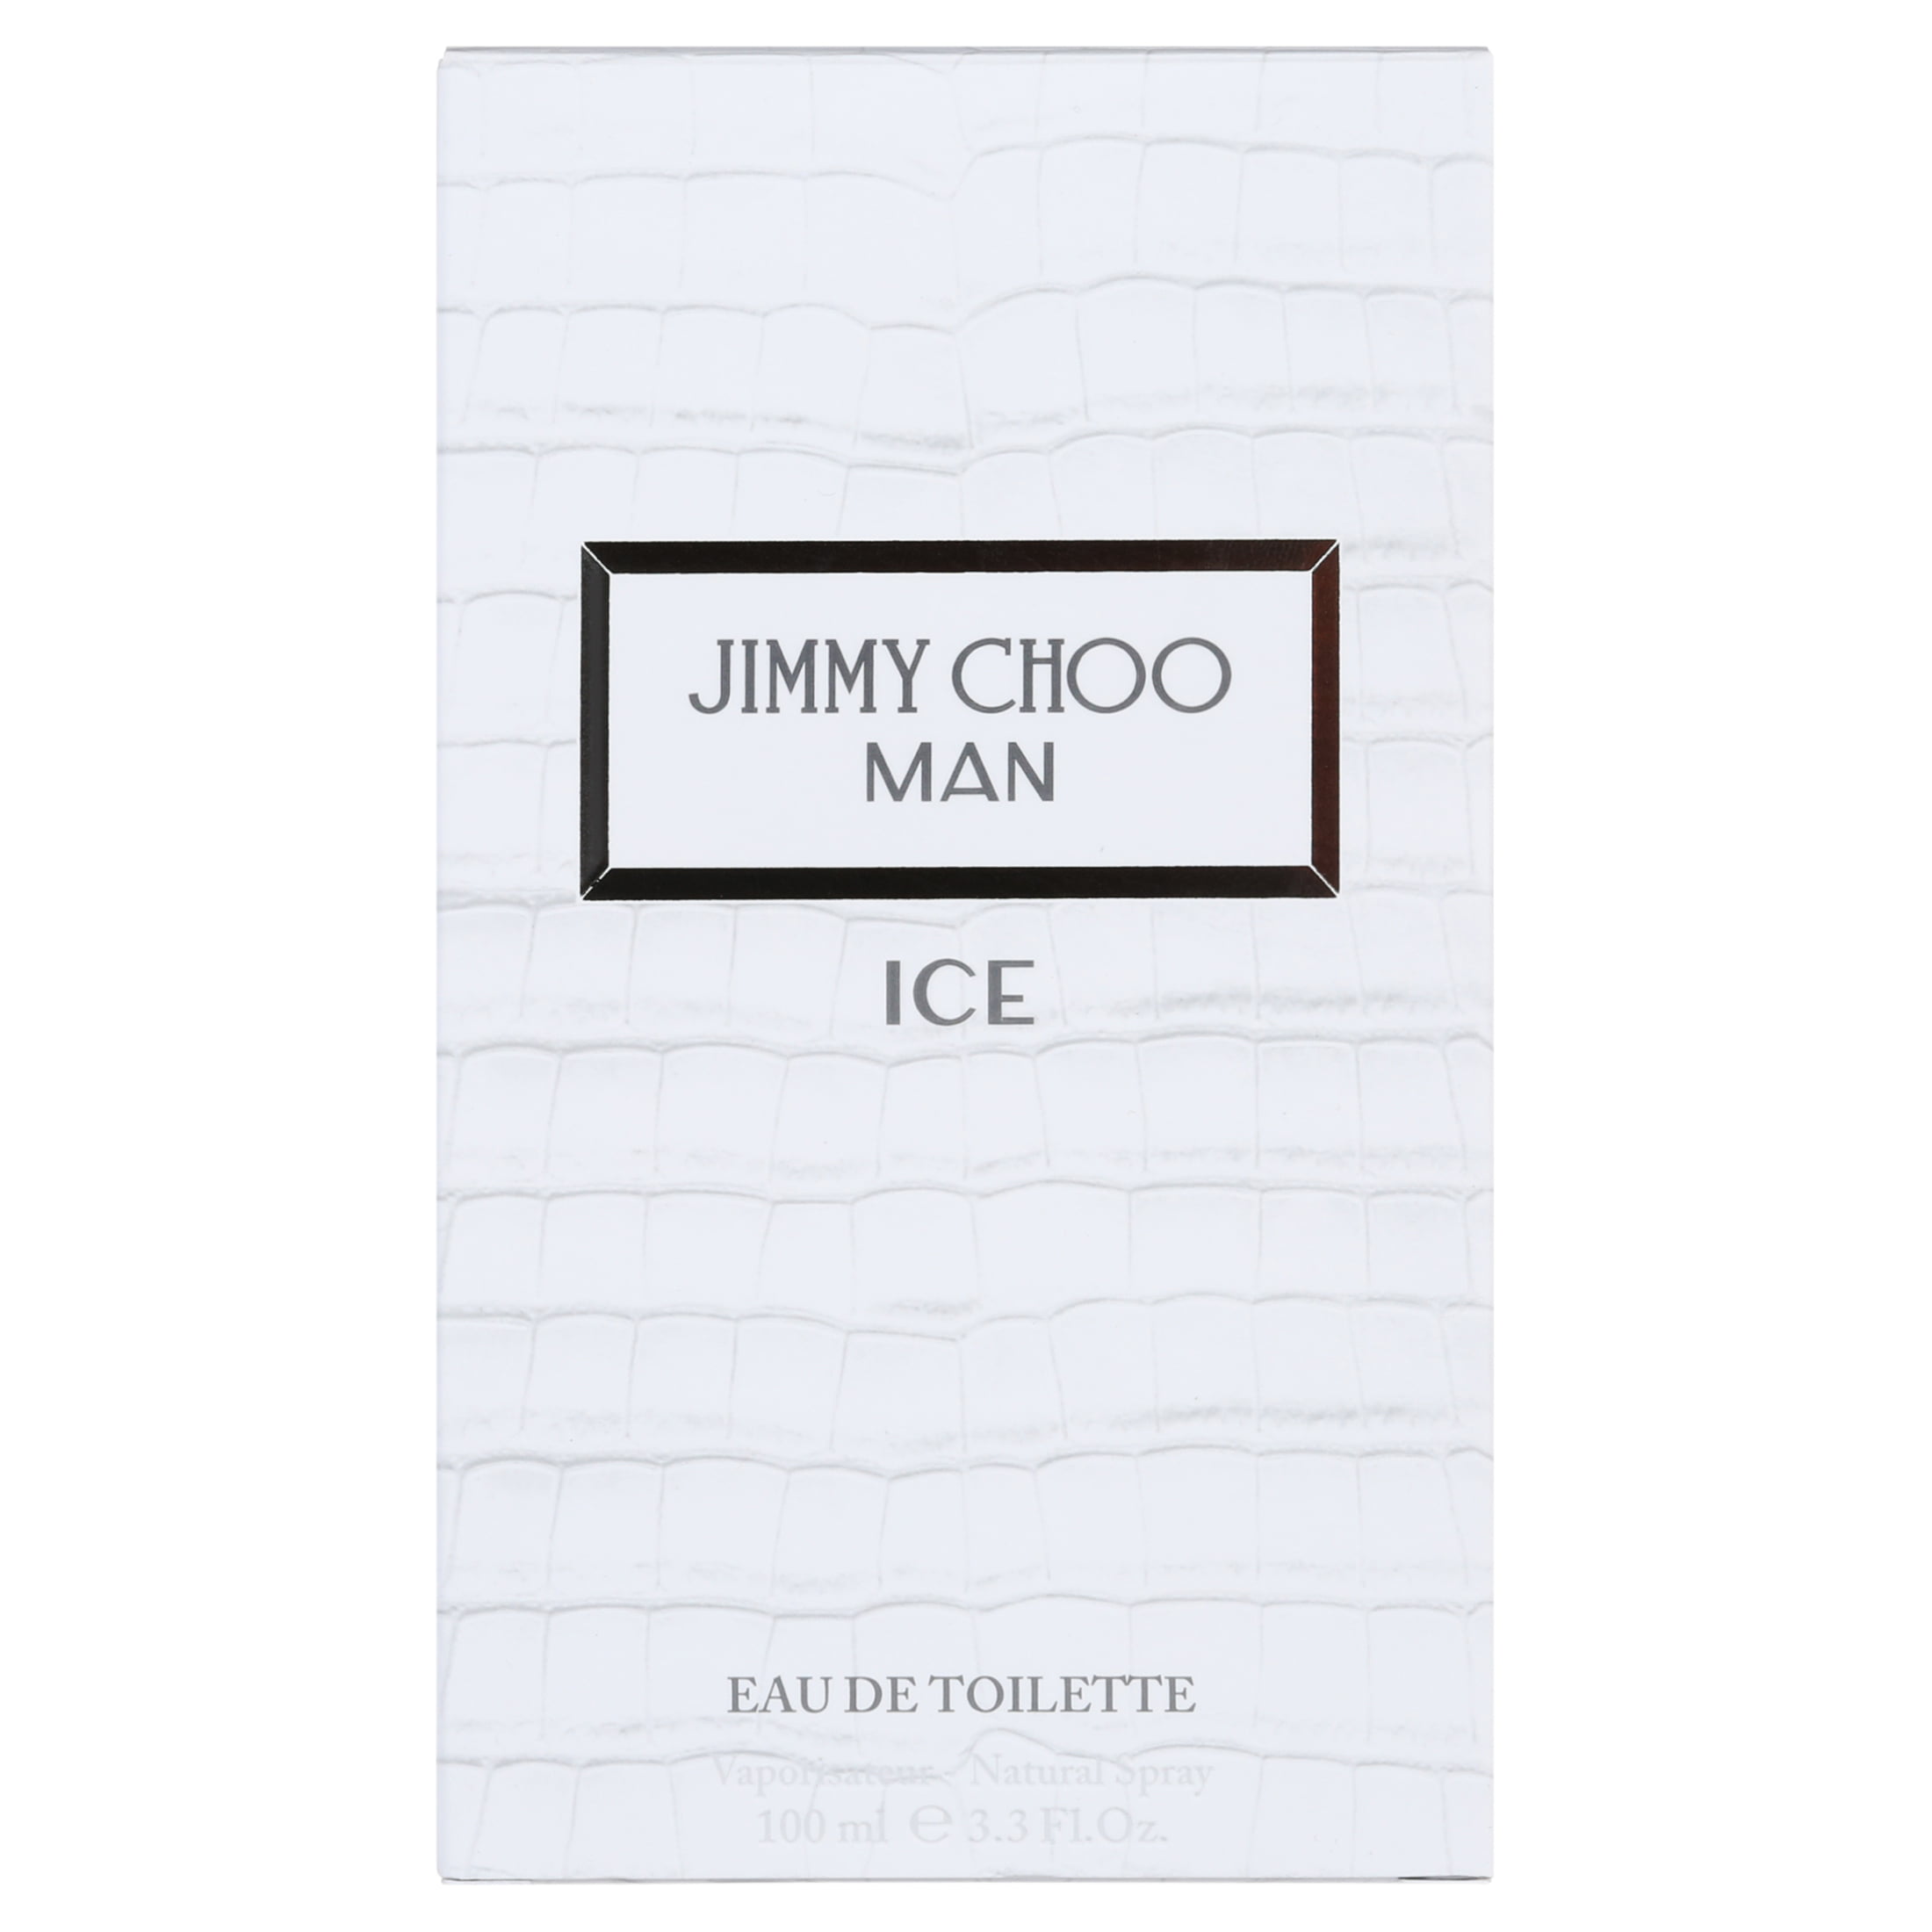 Jimmy Choo Man Ice 1.7 oz EDT spray womens perfume 50 ml NIB